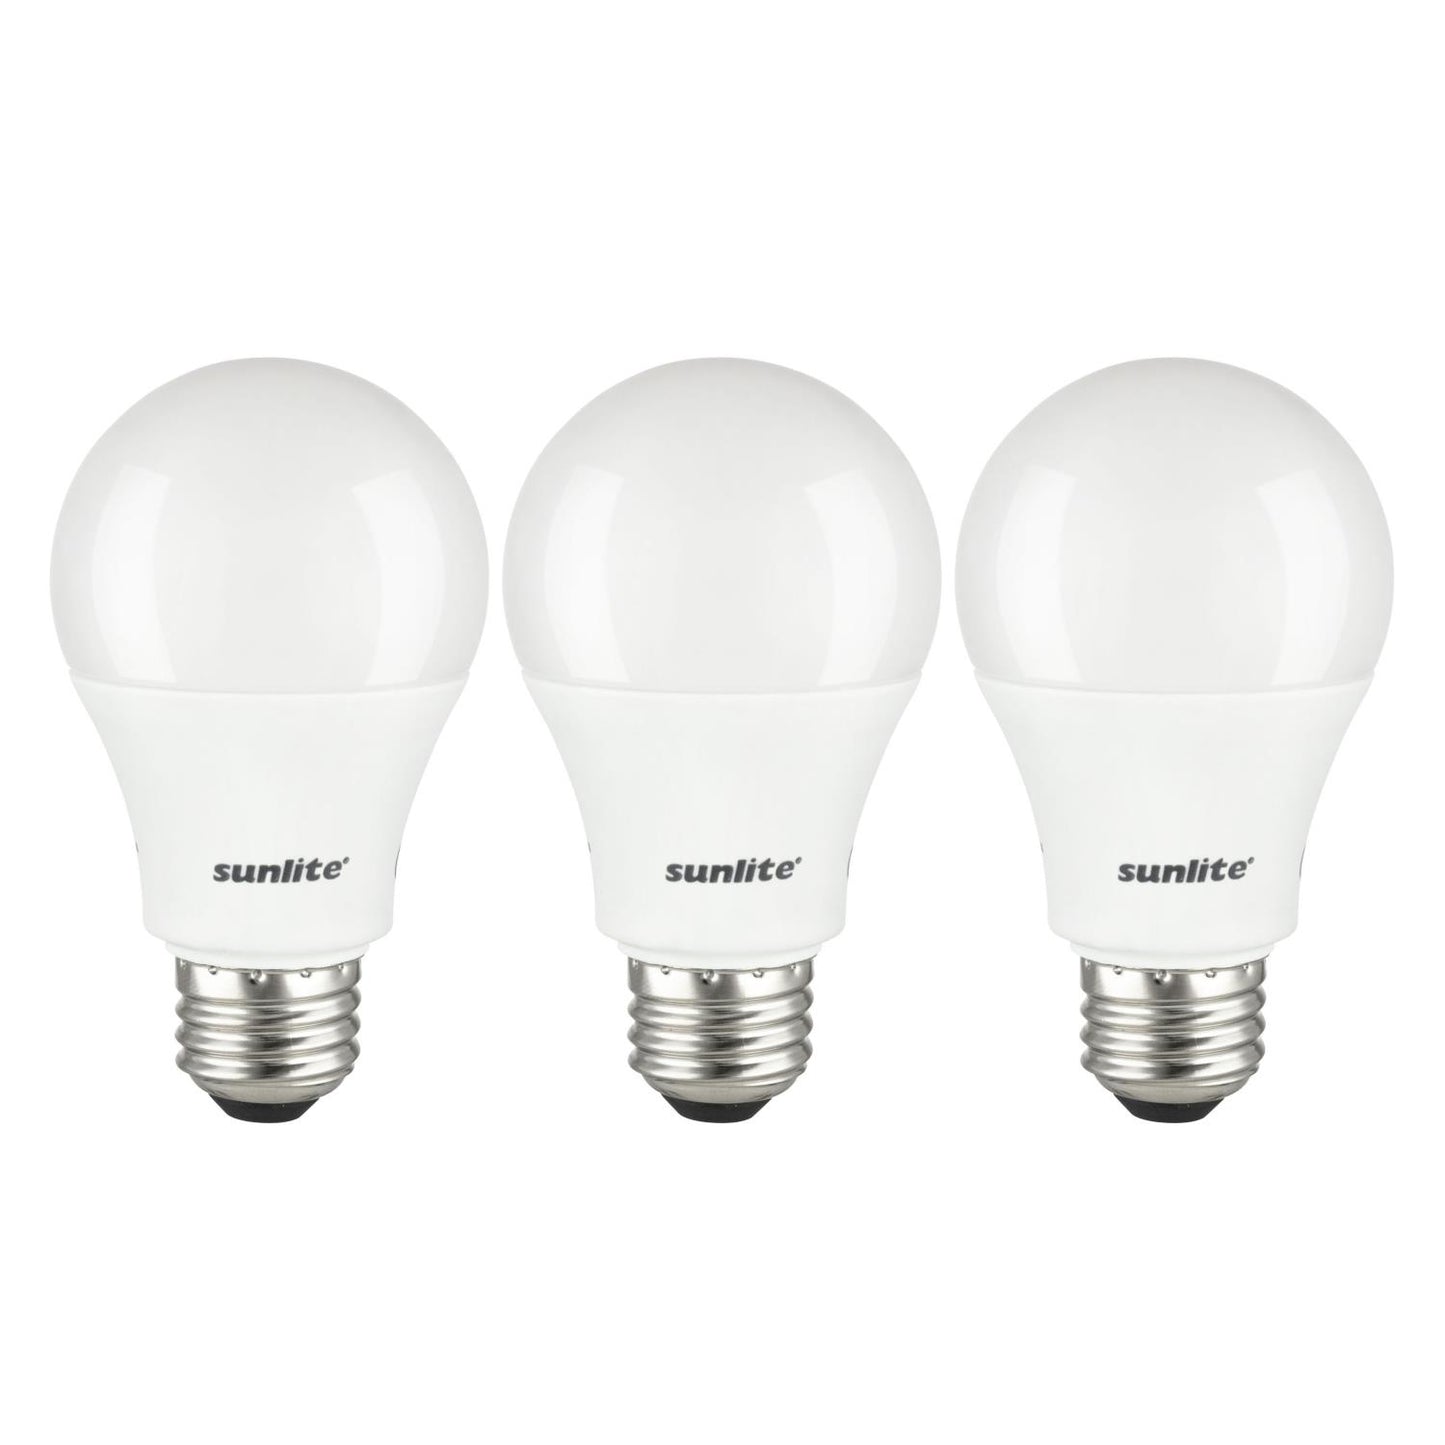 Sunlite A19/LED/12W/ES/D/27K LED A Type Household 12W (75W Equivalent) Light Bulbs Medium (E26) Base, Warm White